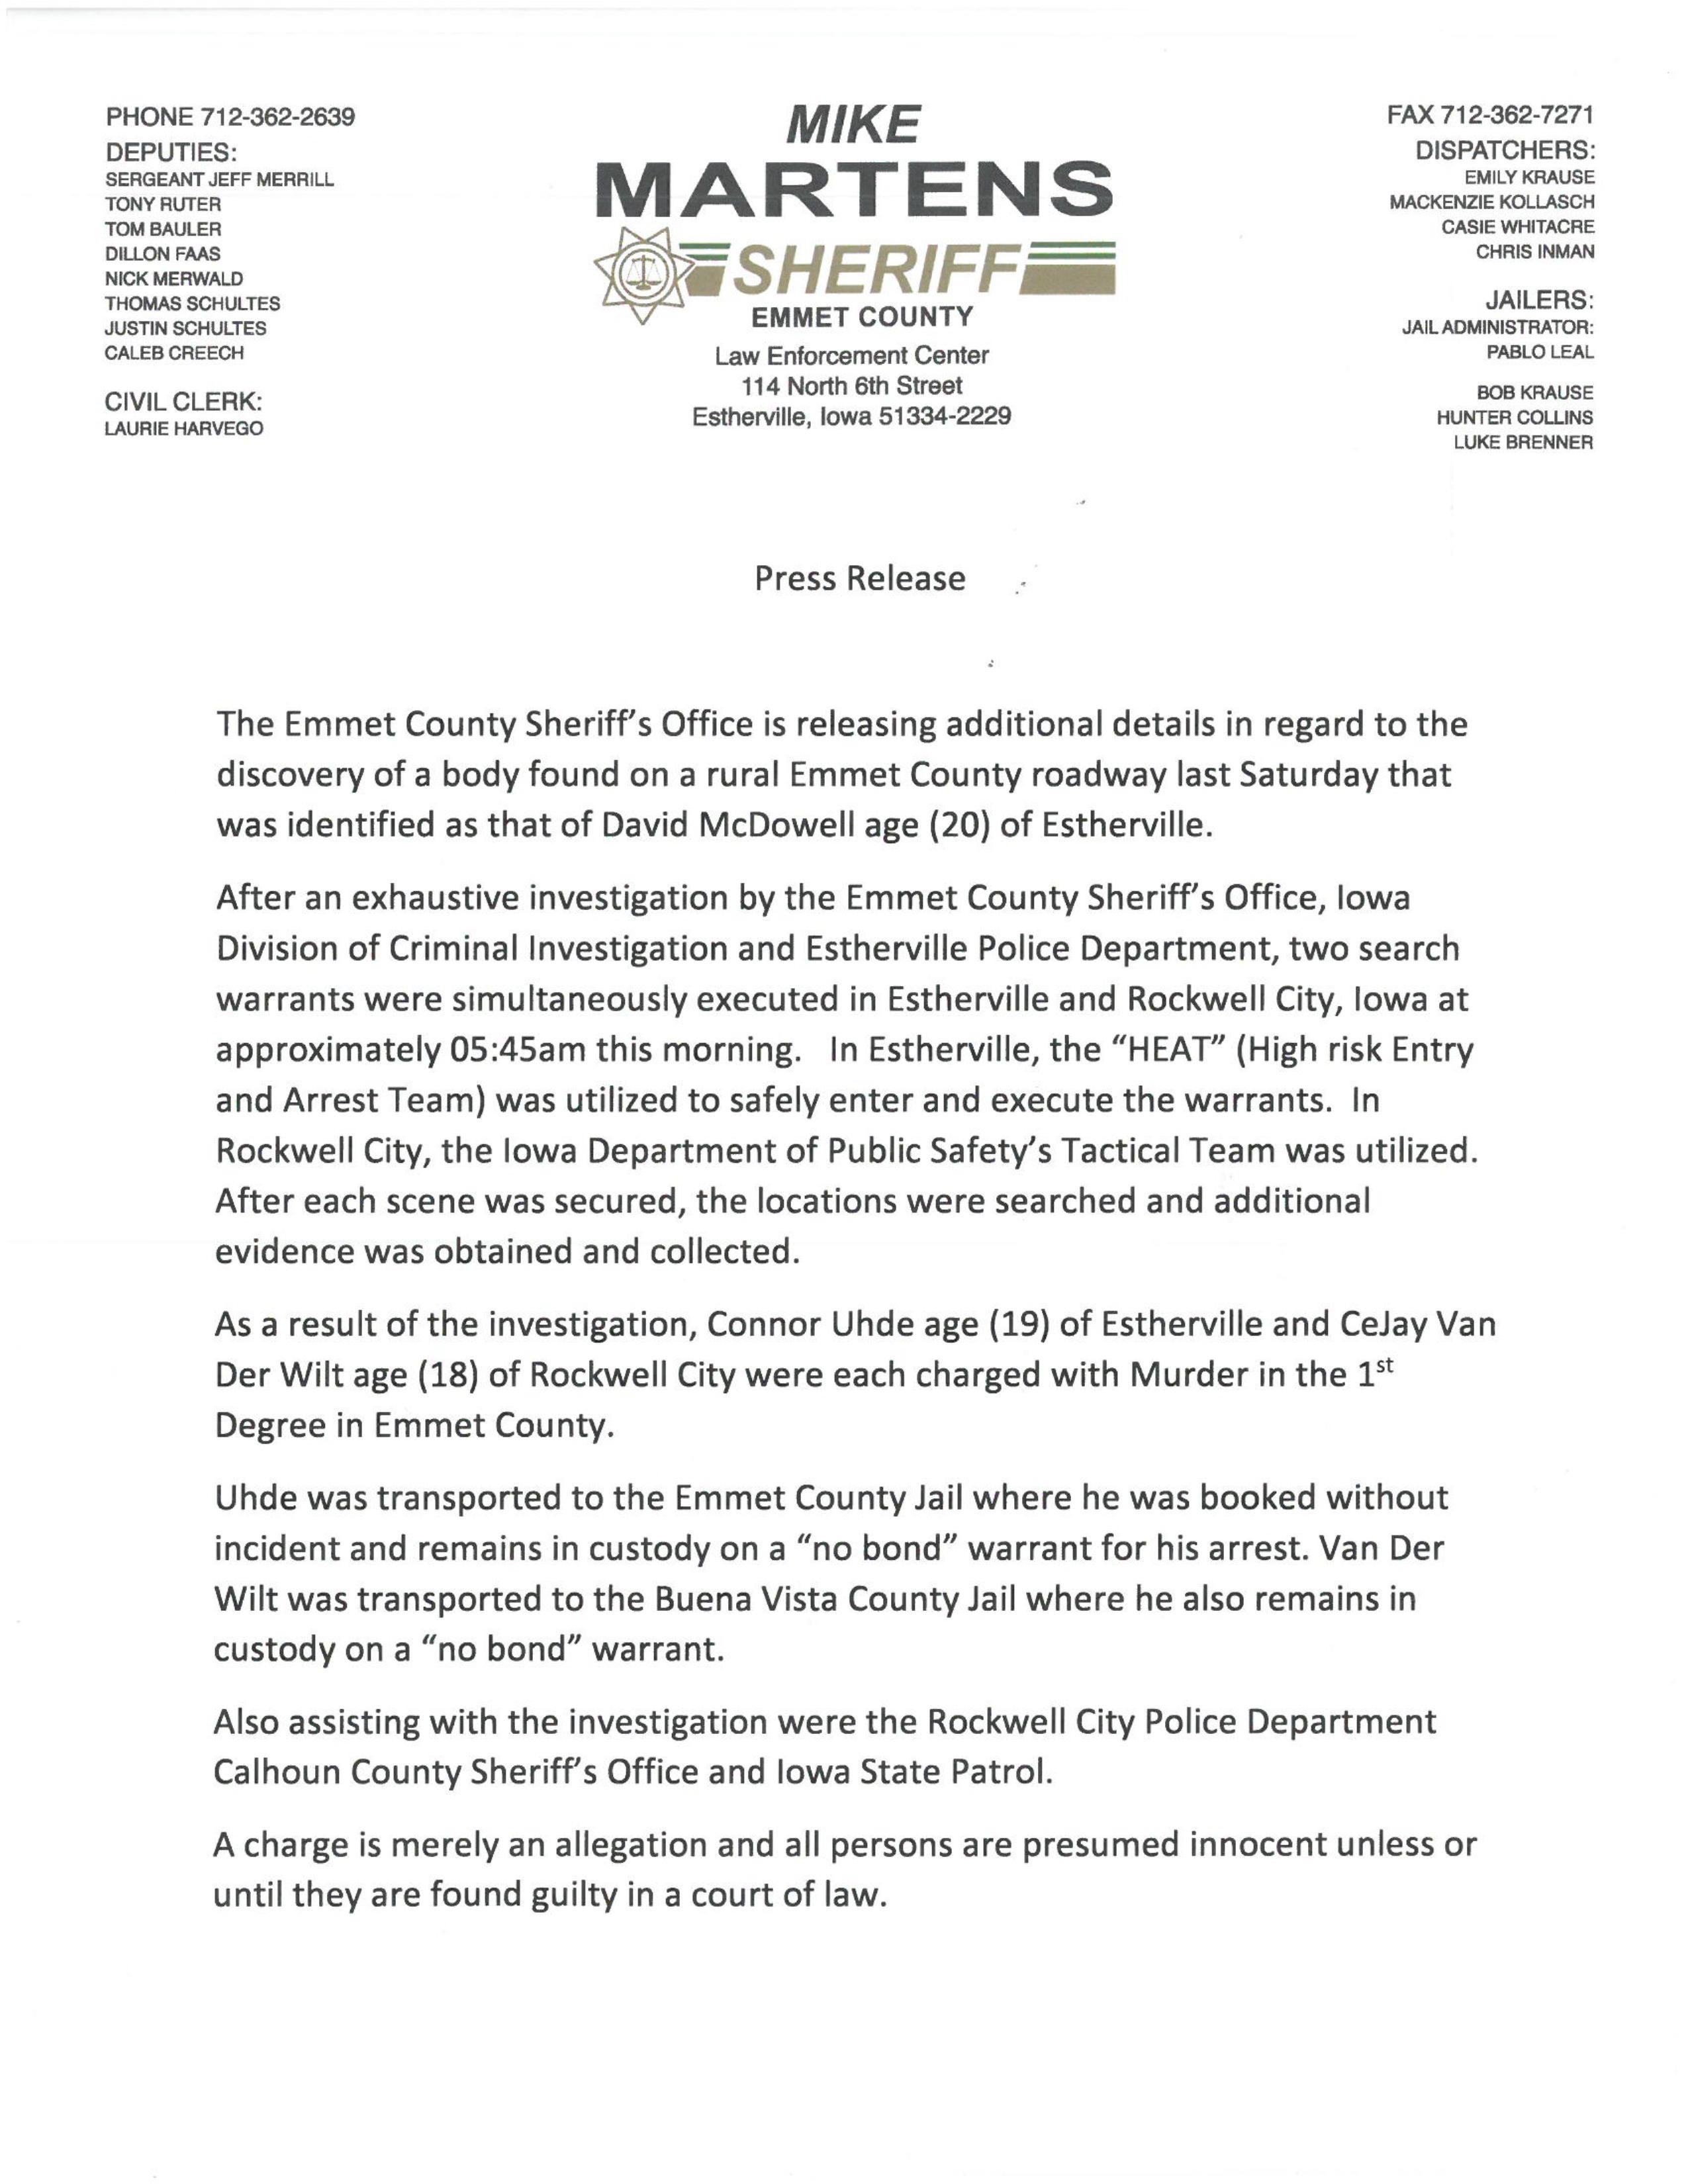 Emmet County Press Release